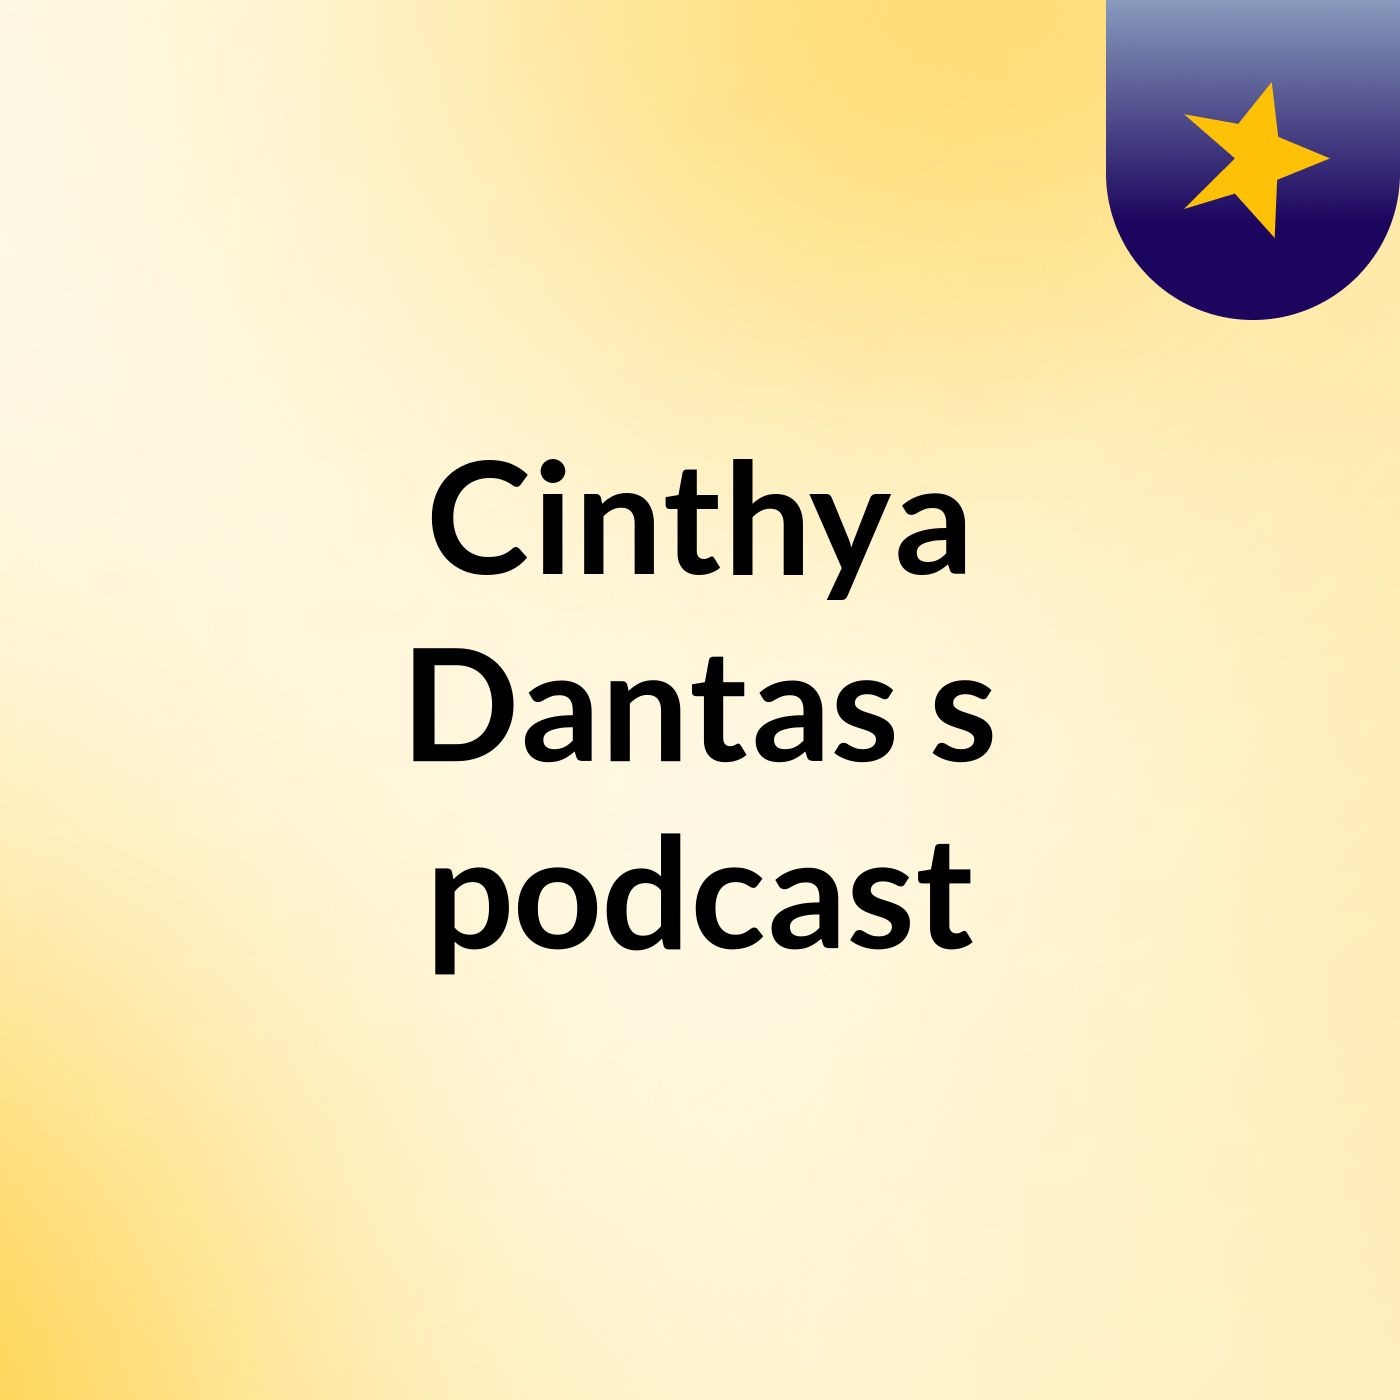 Cinthya Dantas's podcast